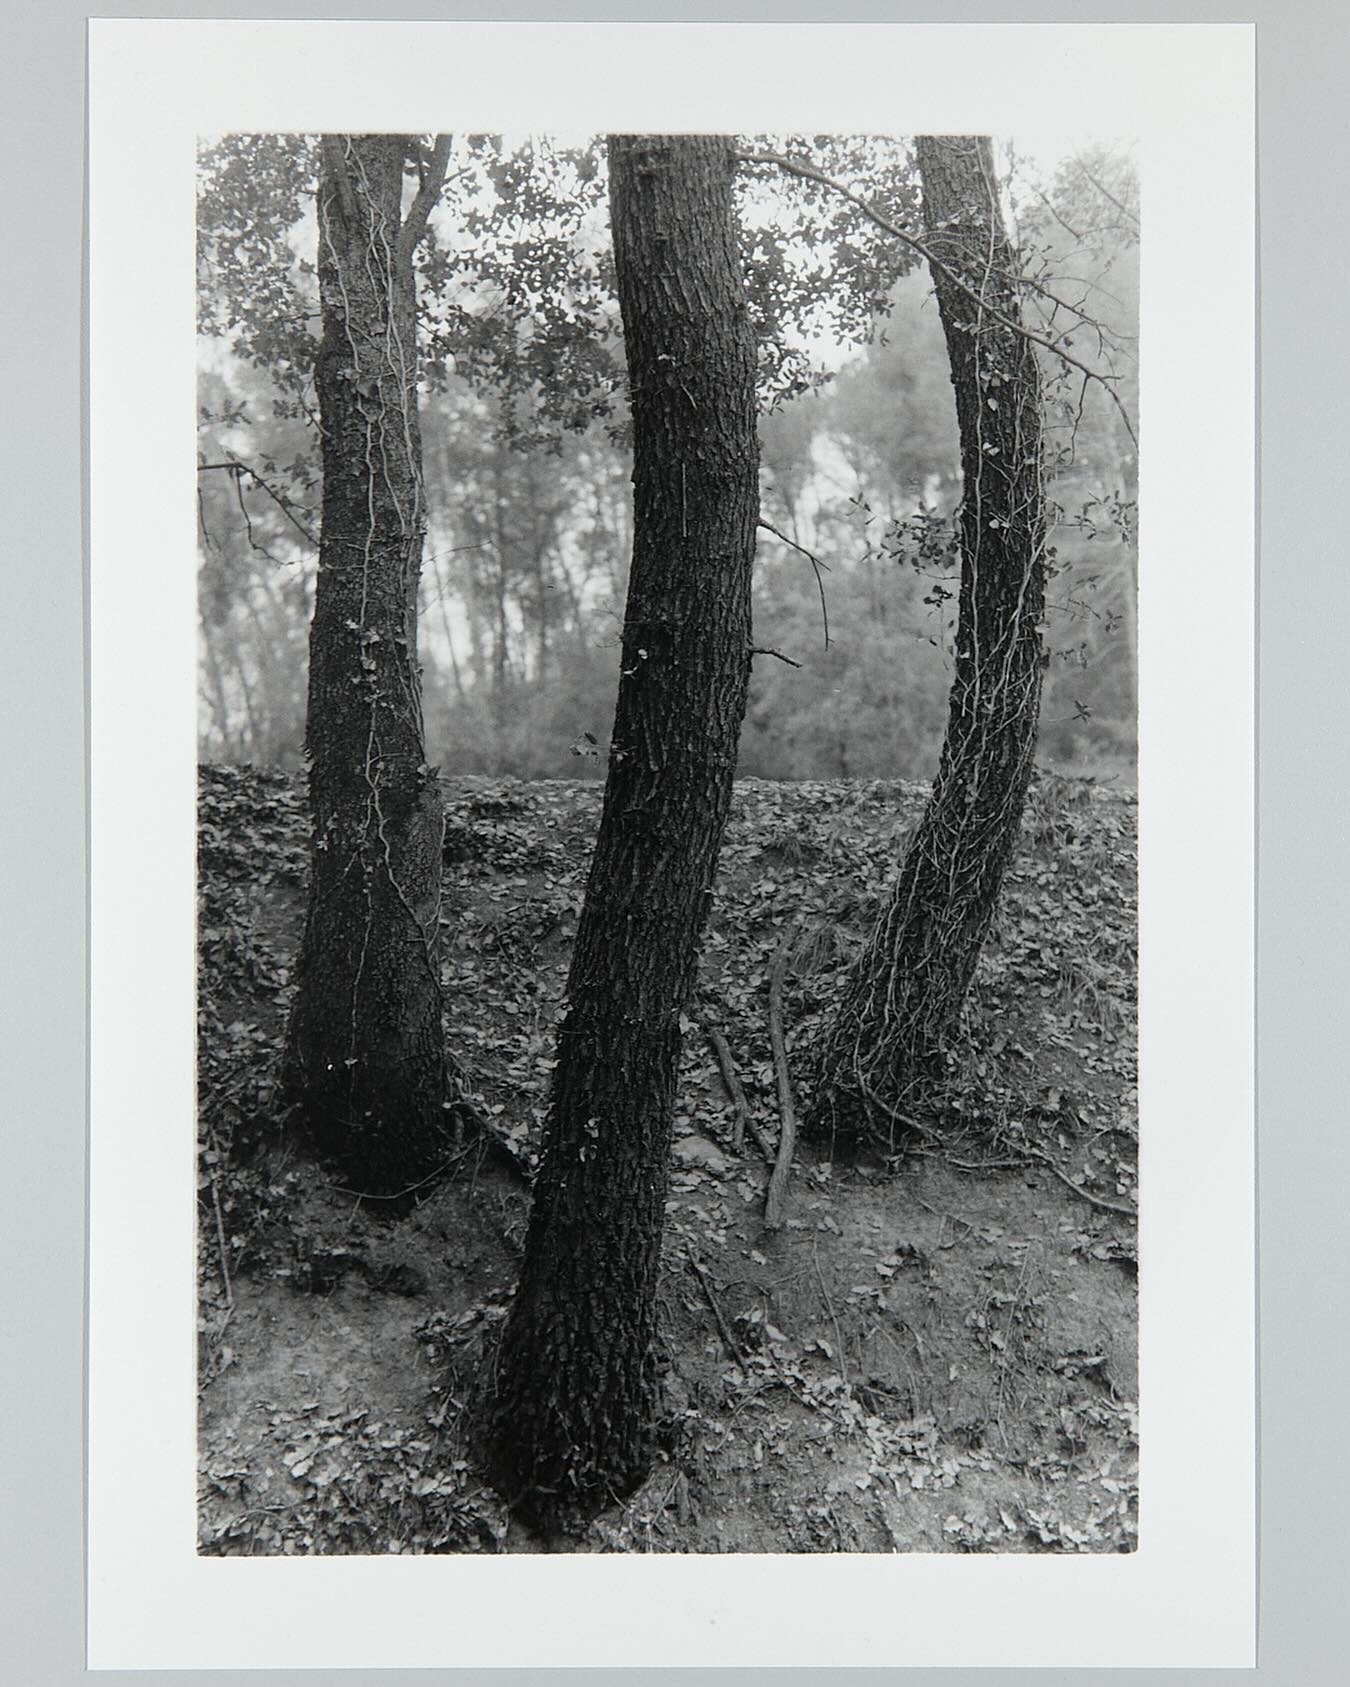 #treethrees#curves#subtlemovement#emergin#hydra#forms#figures#analogphotography#printedphotograph#filmphotography#ilfordfp4plus#splines#phantasmagoric#ghosts#creatures#subtle#quietly#menace